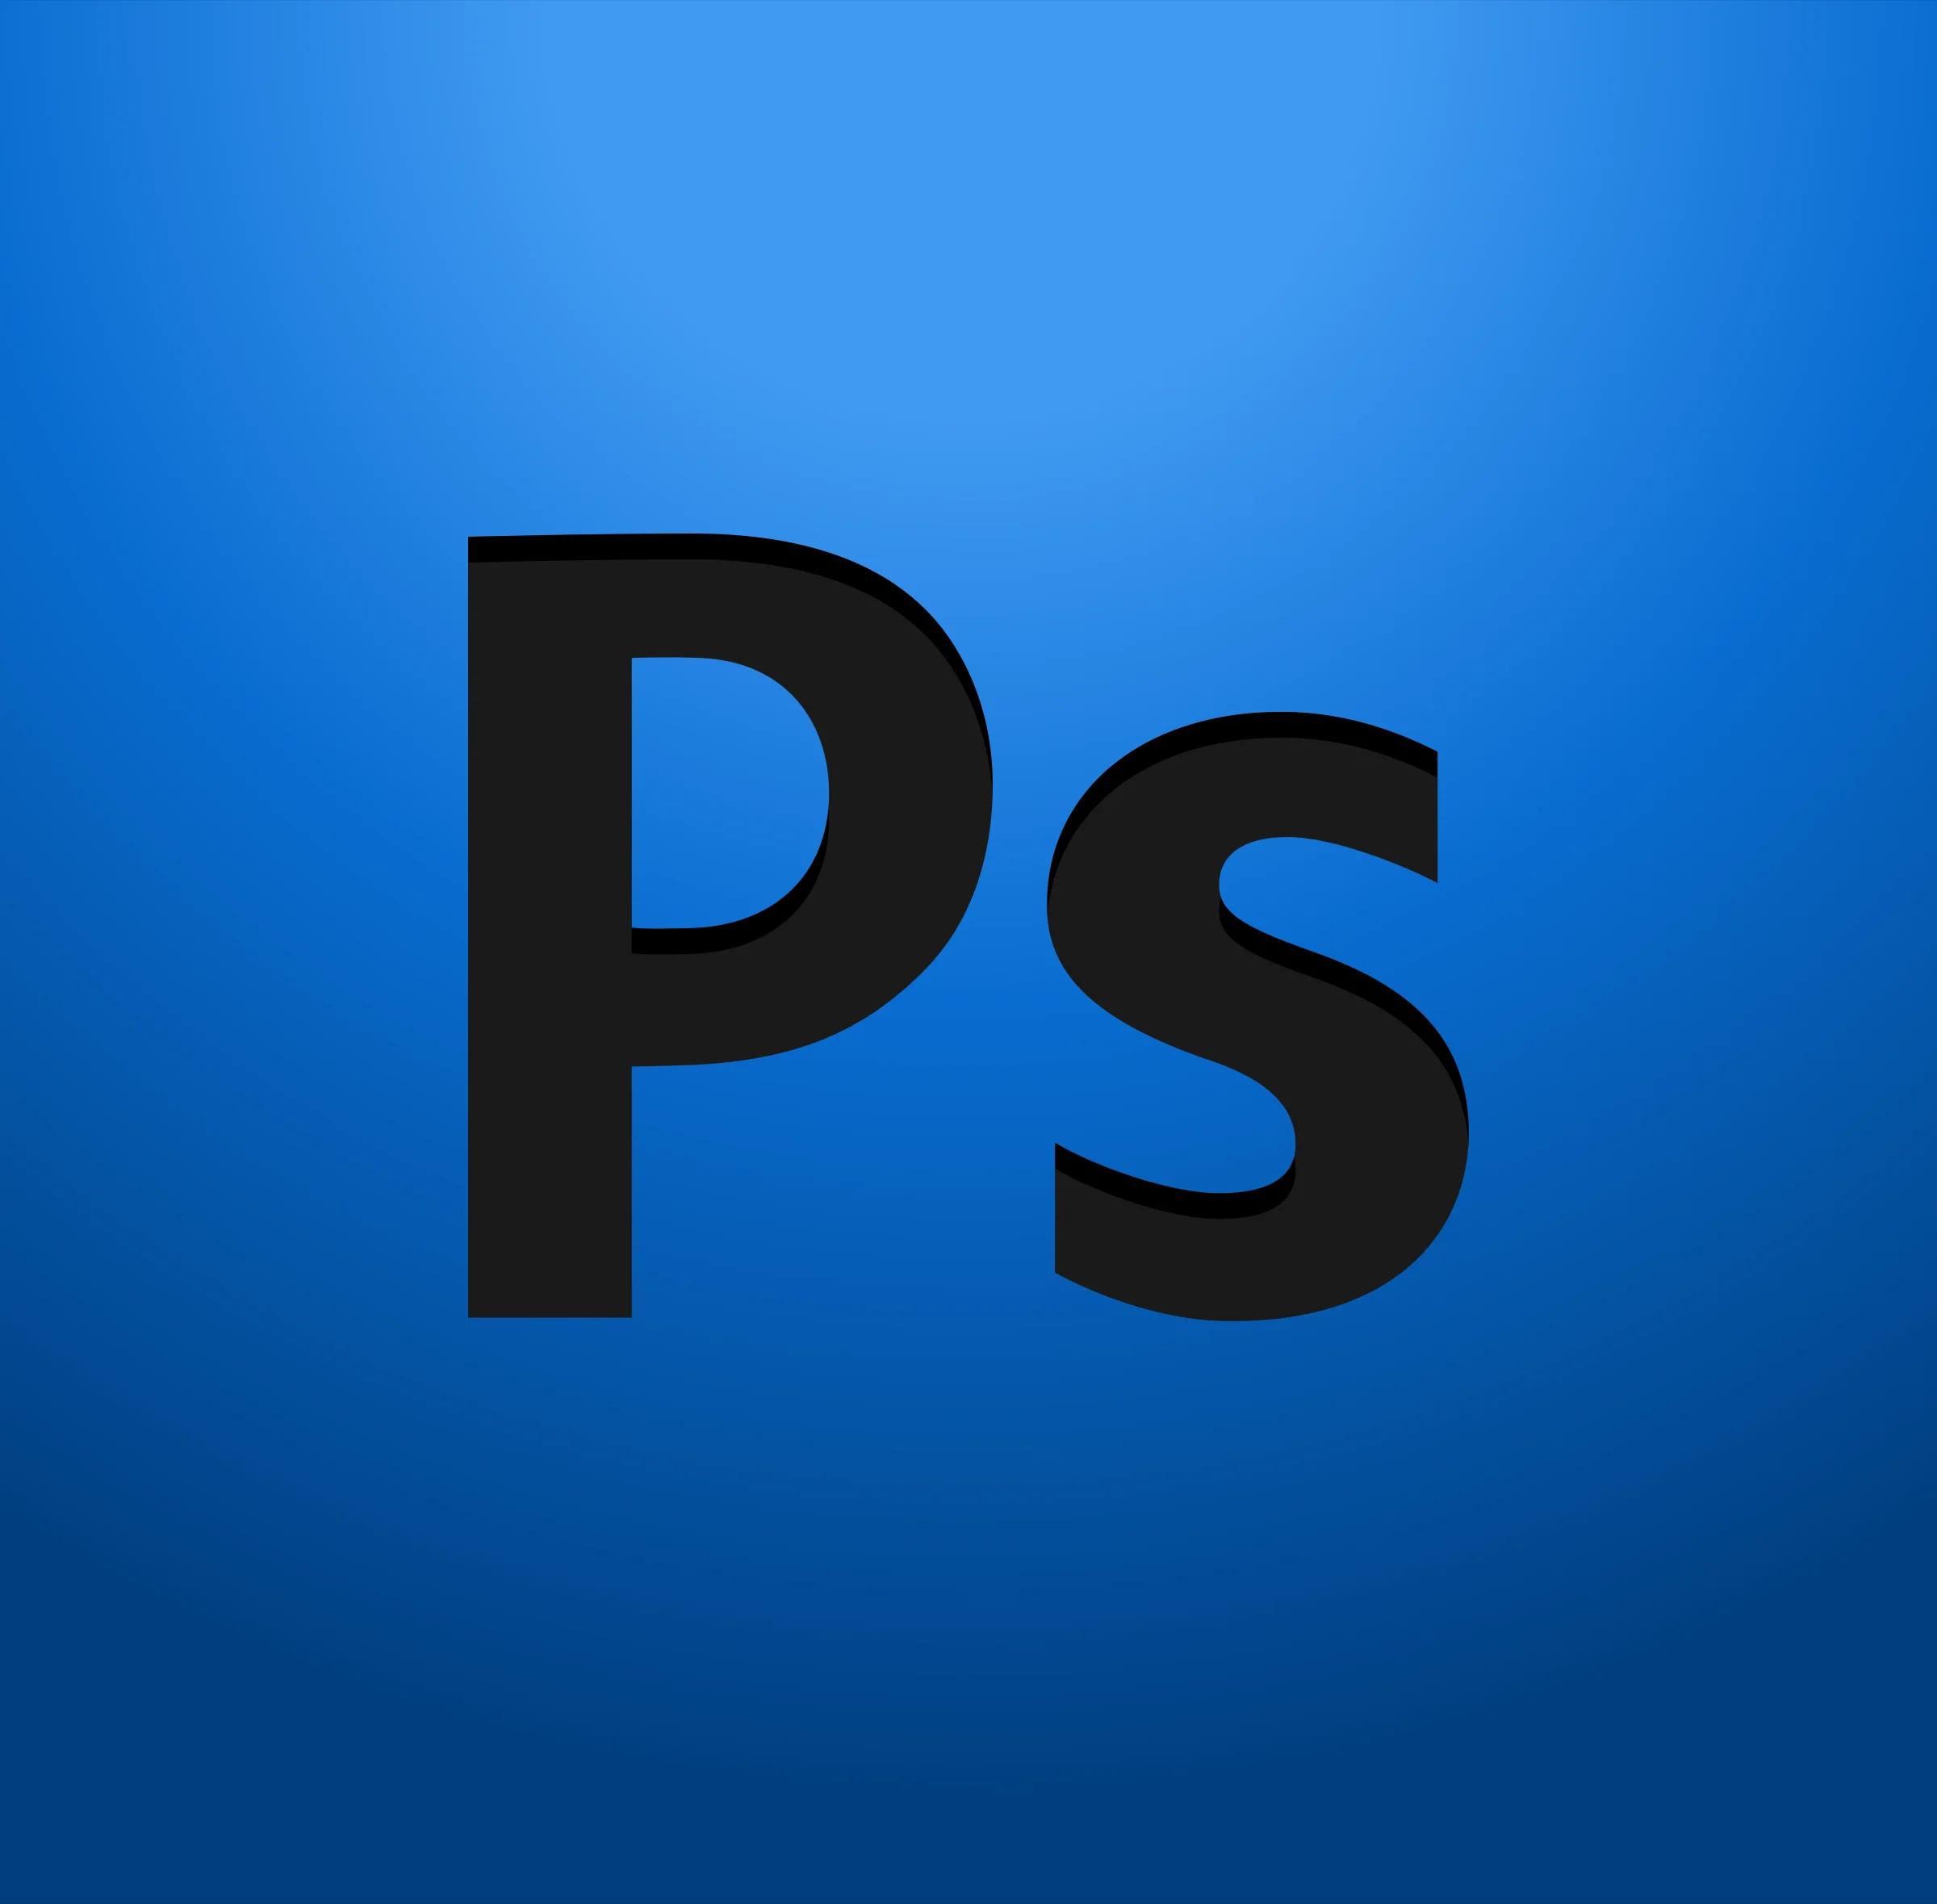 Adobe Photoshop training in pondicherry